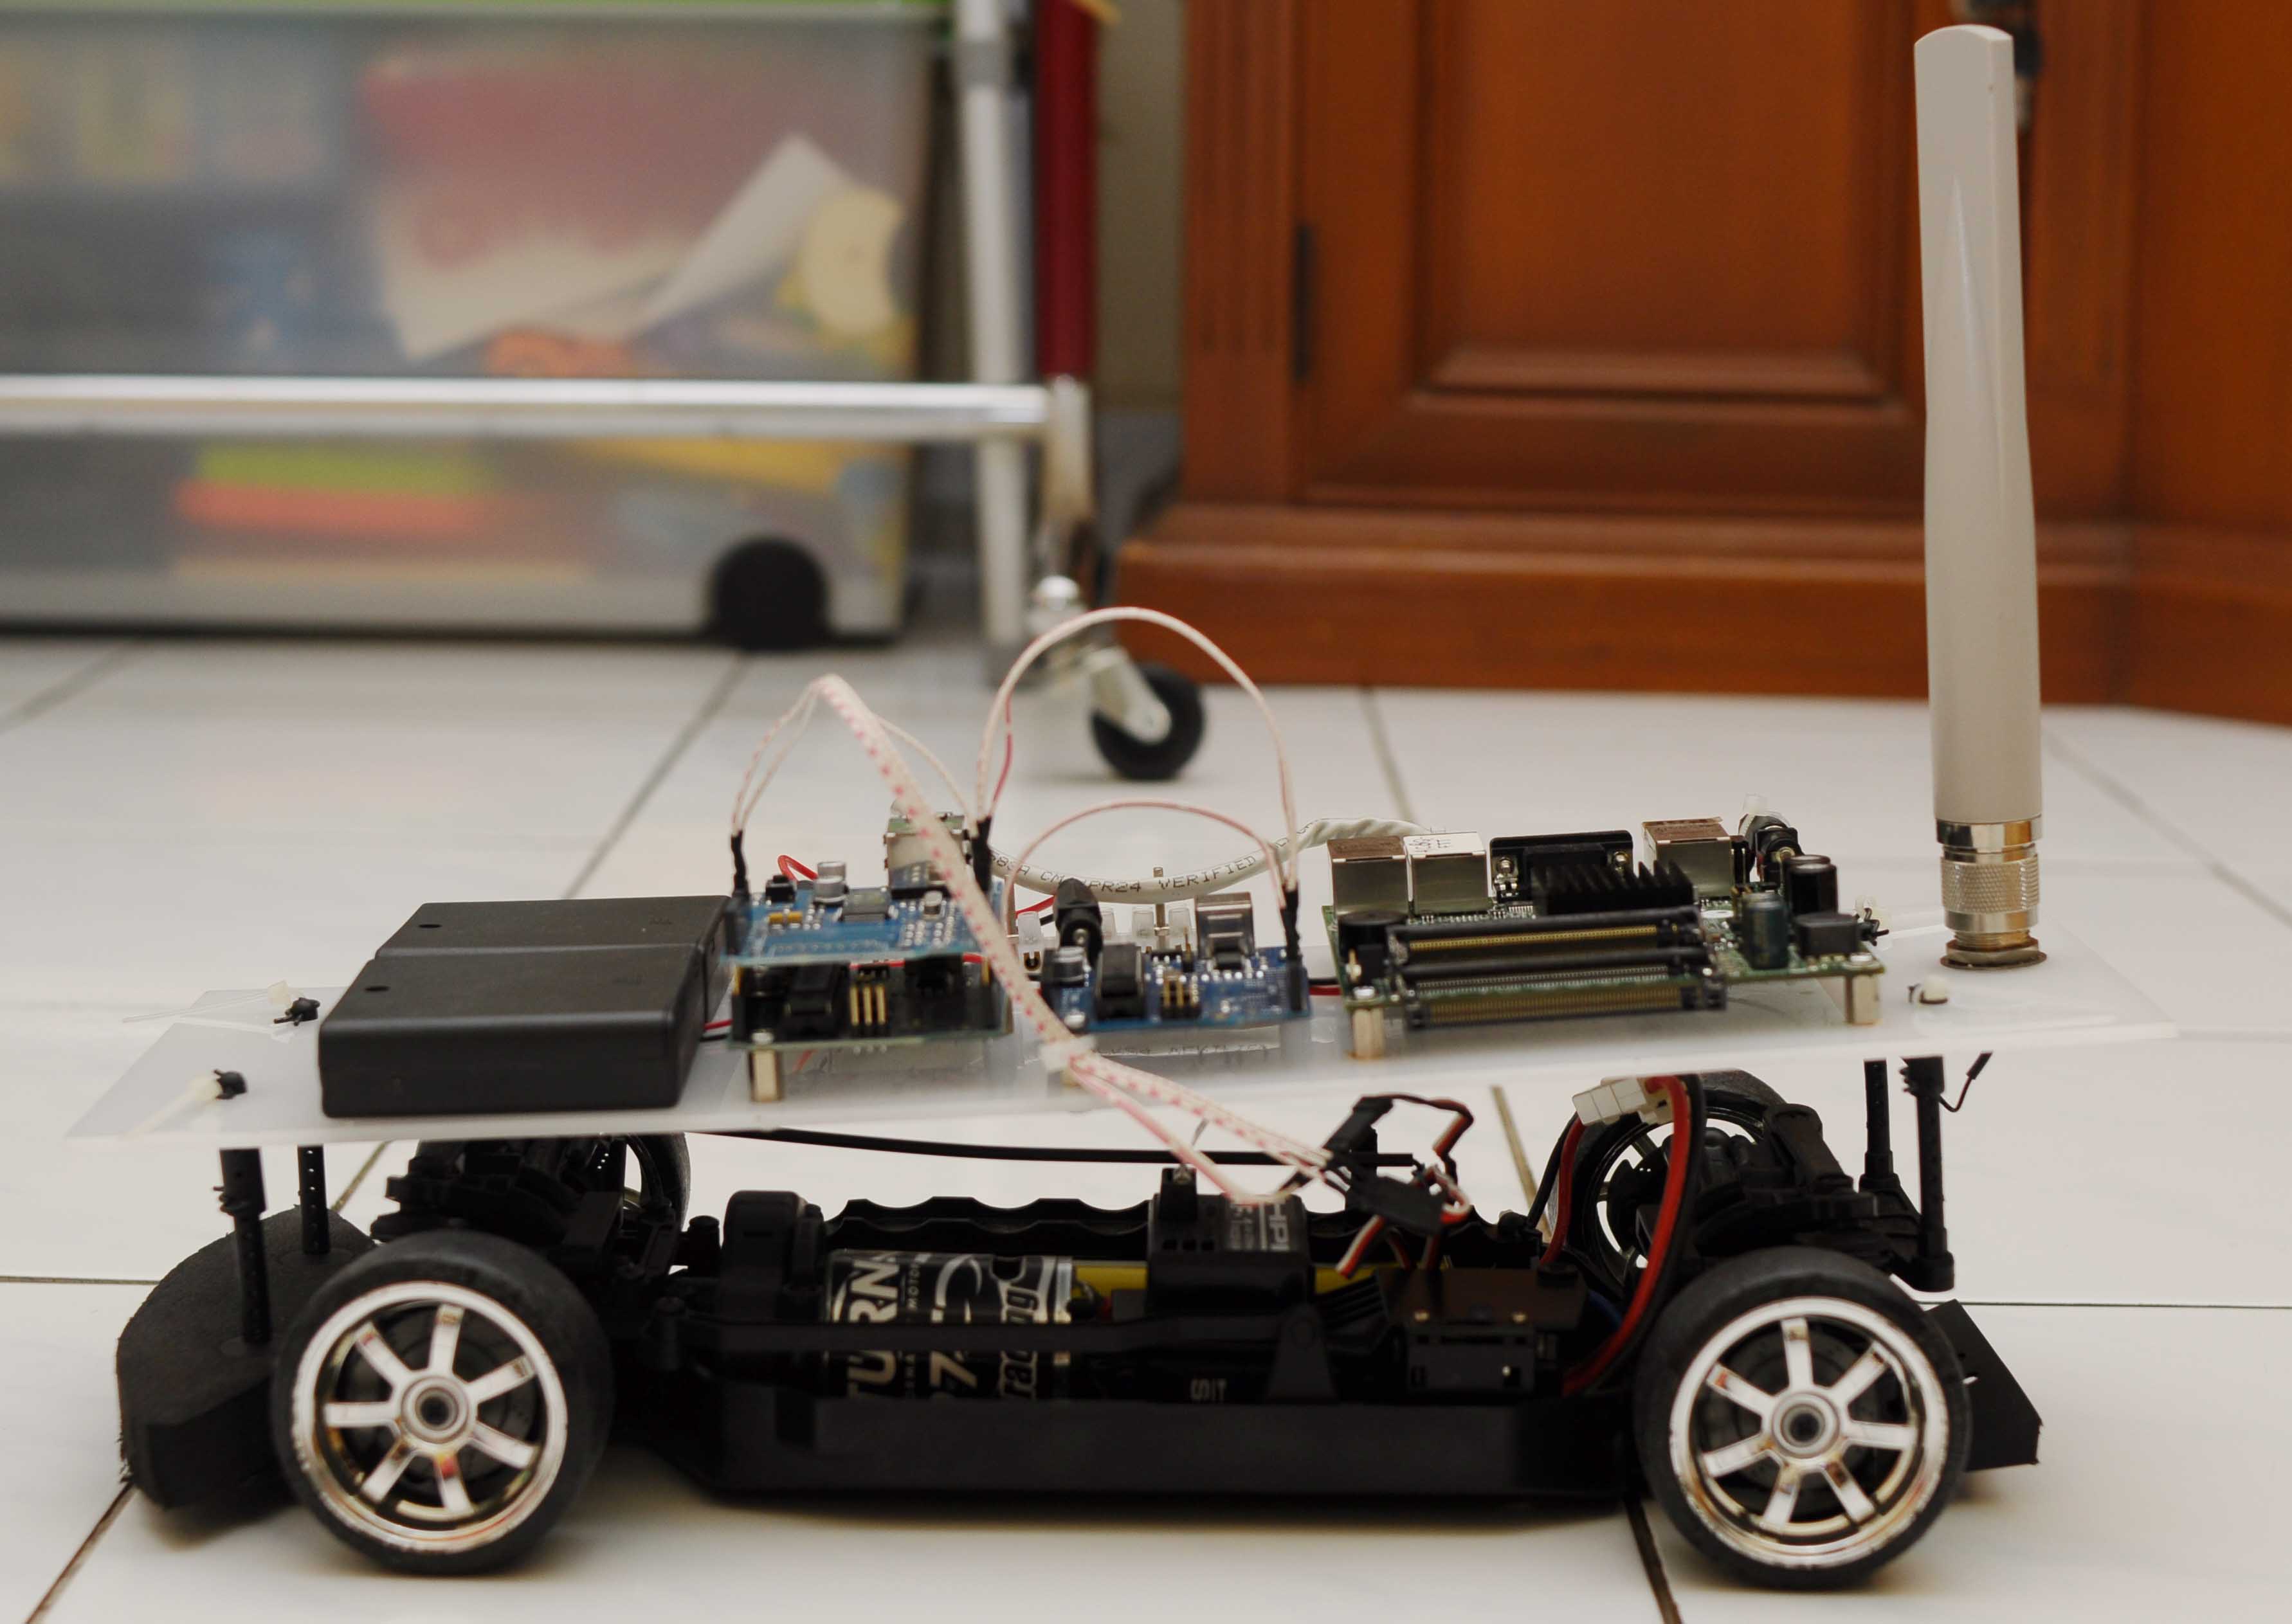 RCdunio Modifikasi RC Drift HPI E10 Dengan Arduino Sebagai